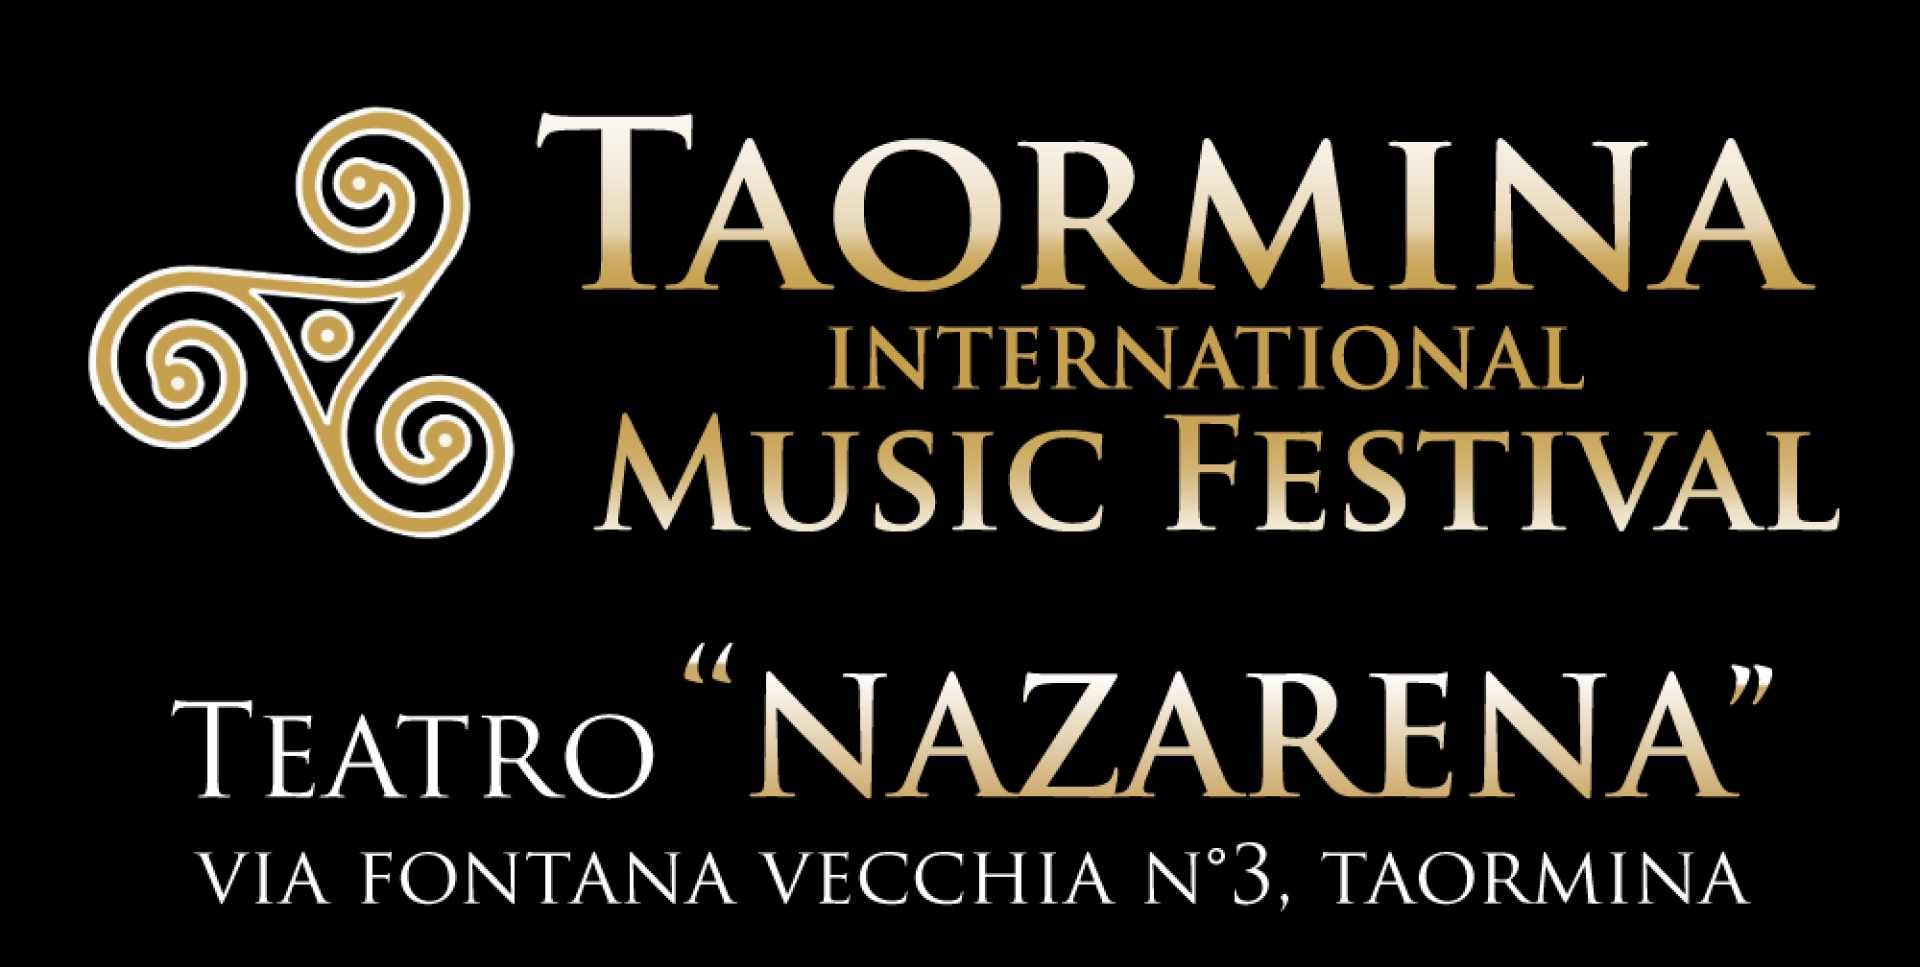 Internationales Musikfestival von Taormina